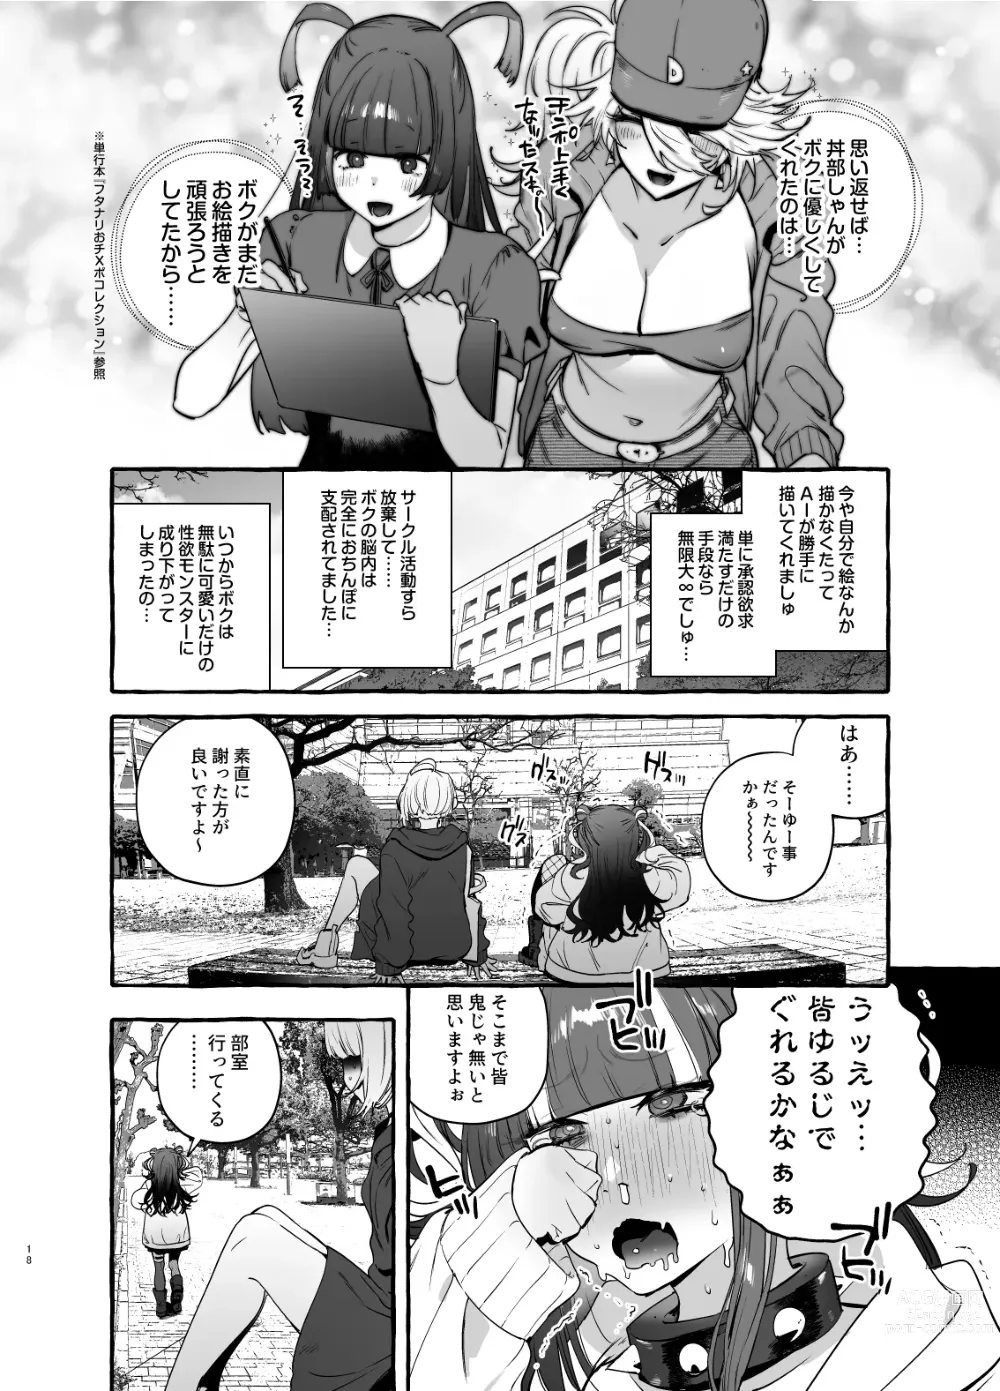 Page 20 of doujinshi Wotasa no Gyaru VS Jirai Otoko